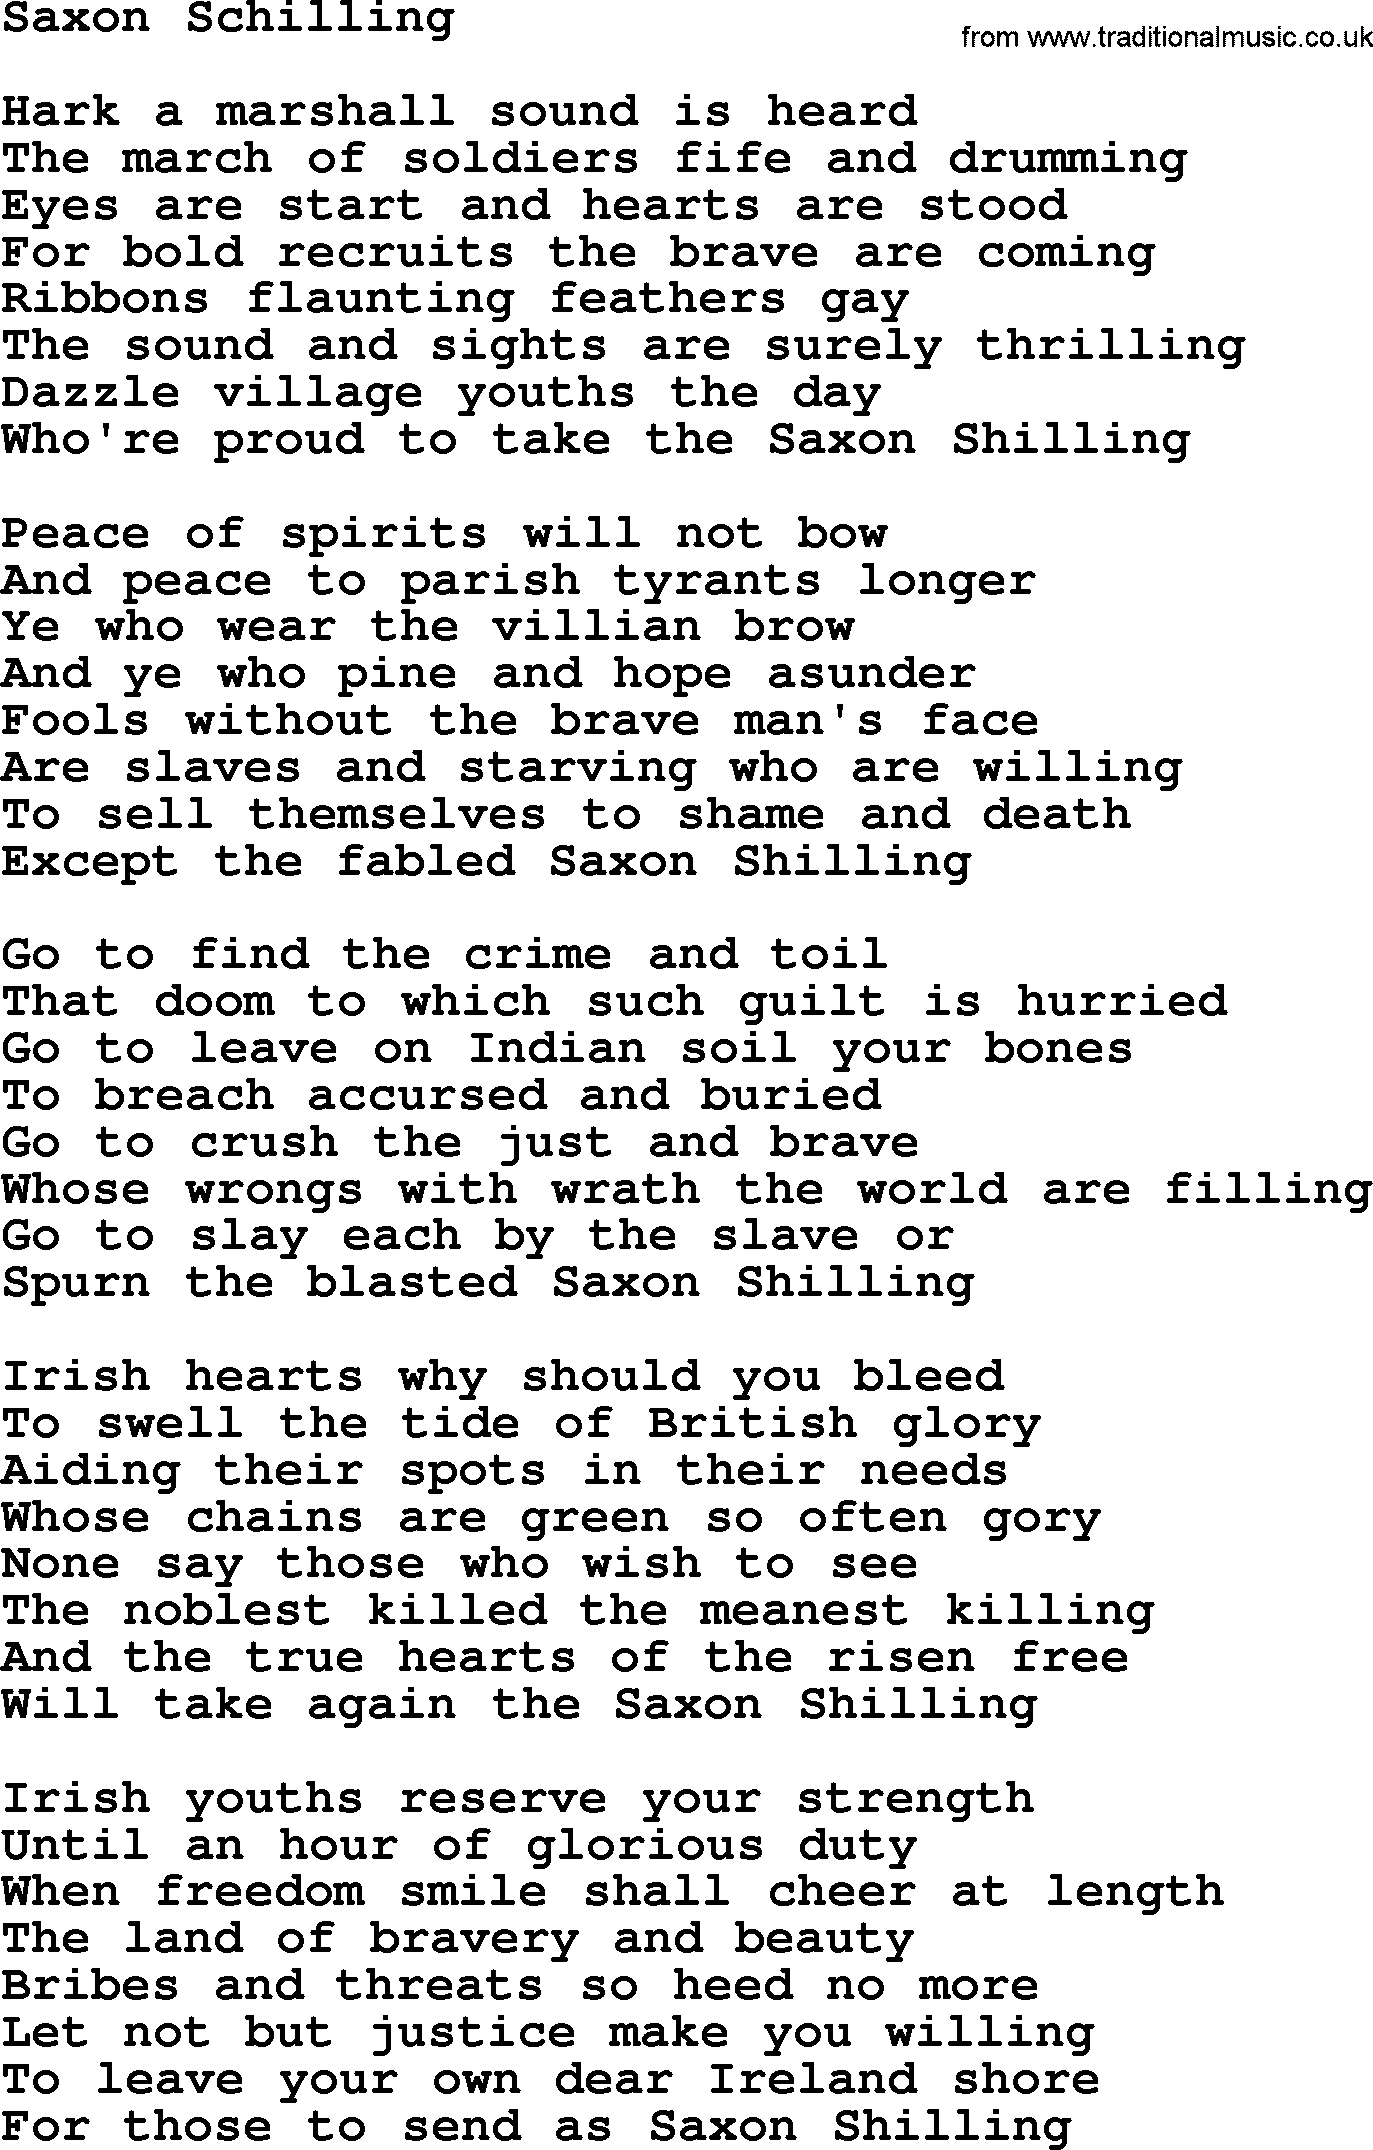 The Dubliners song: Saxon Schilling, lyrics